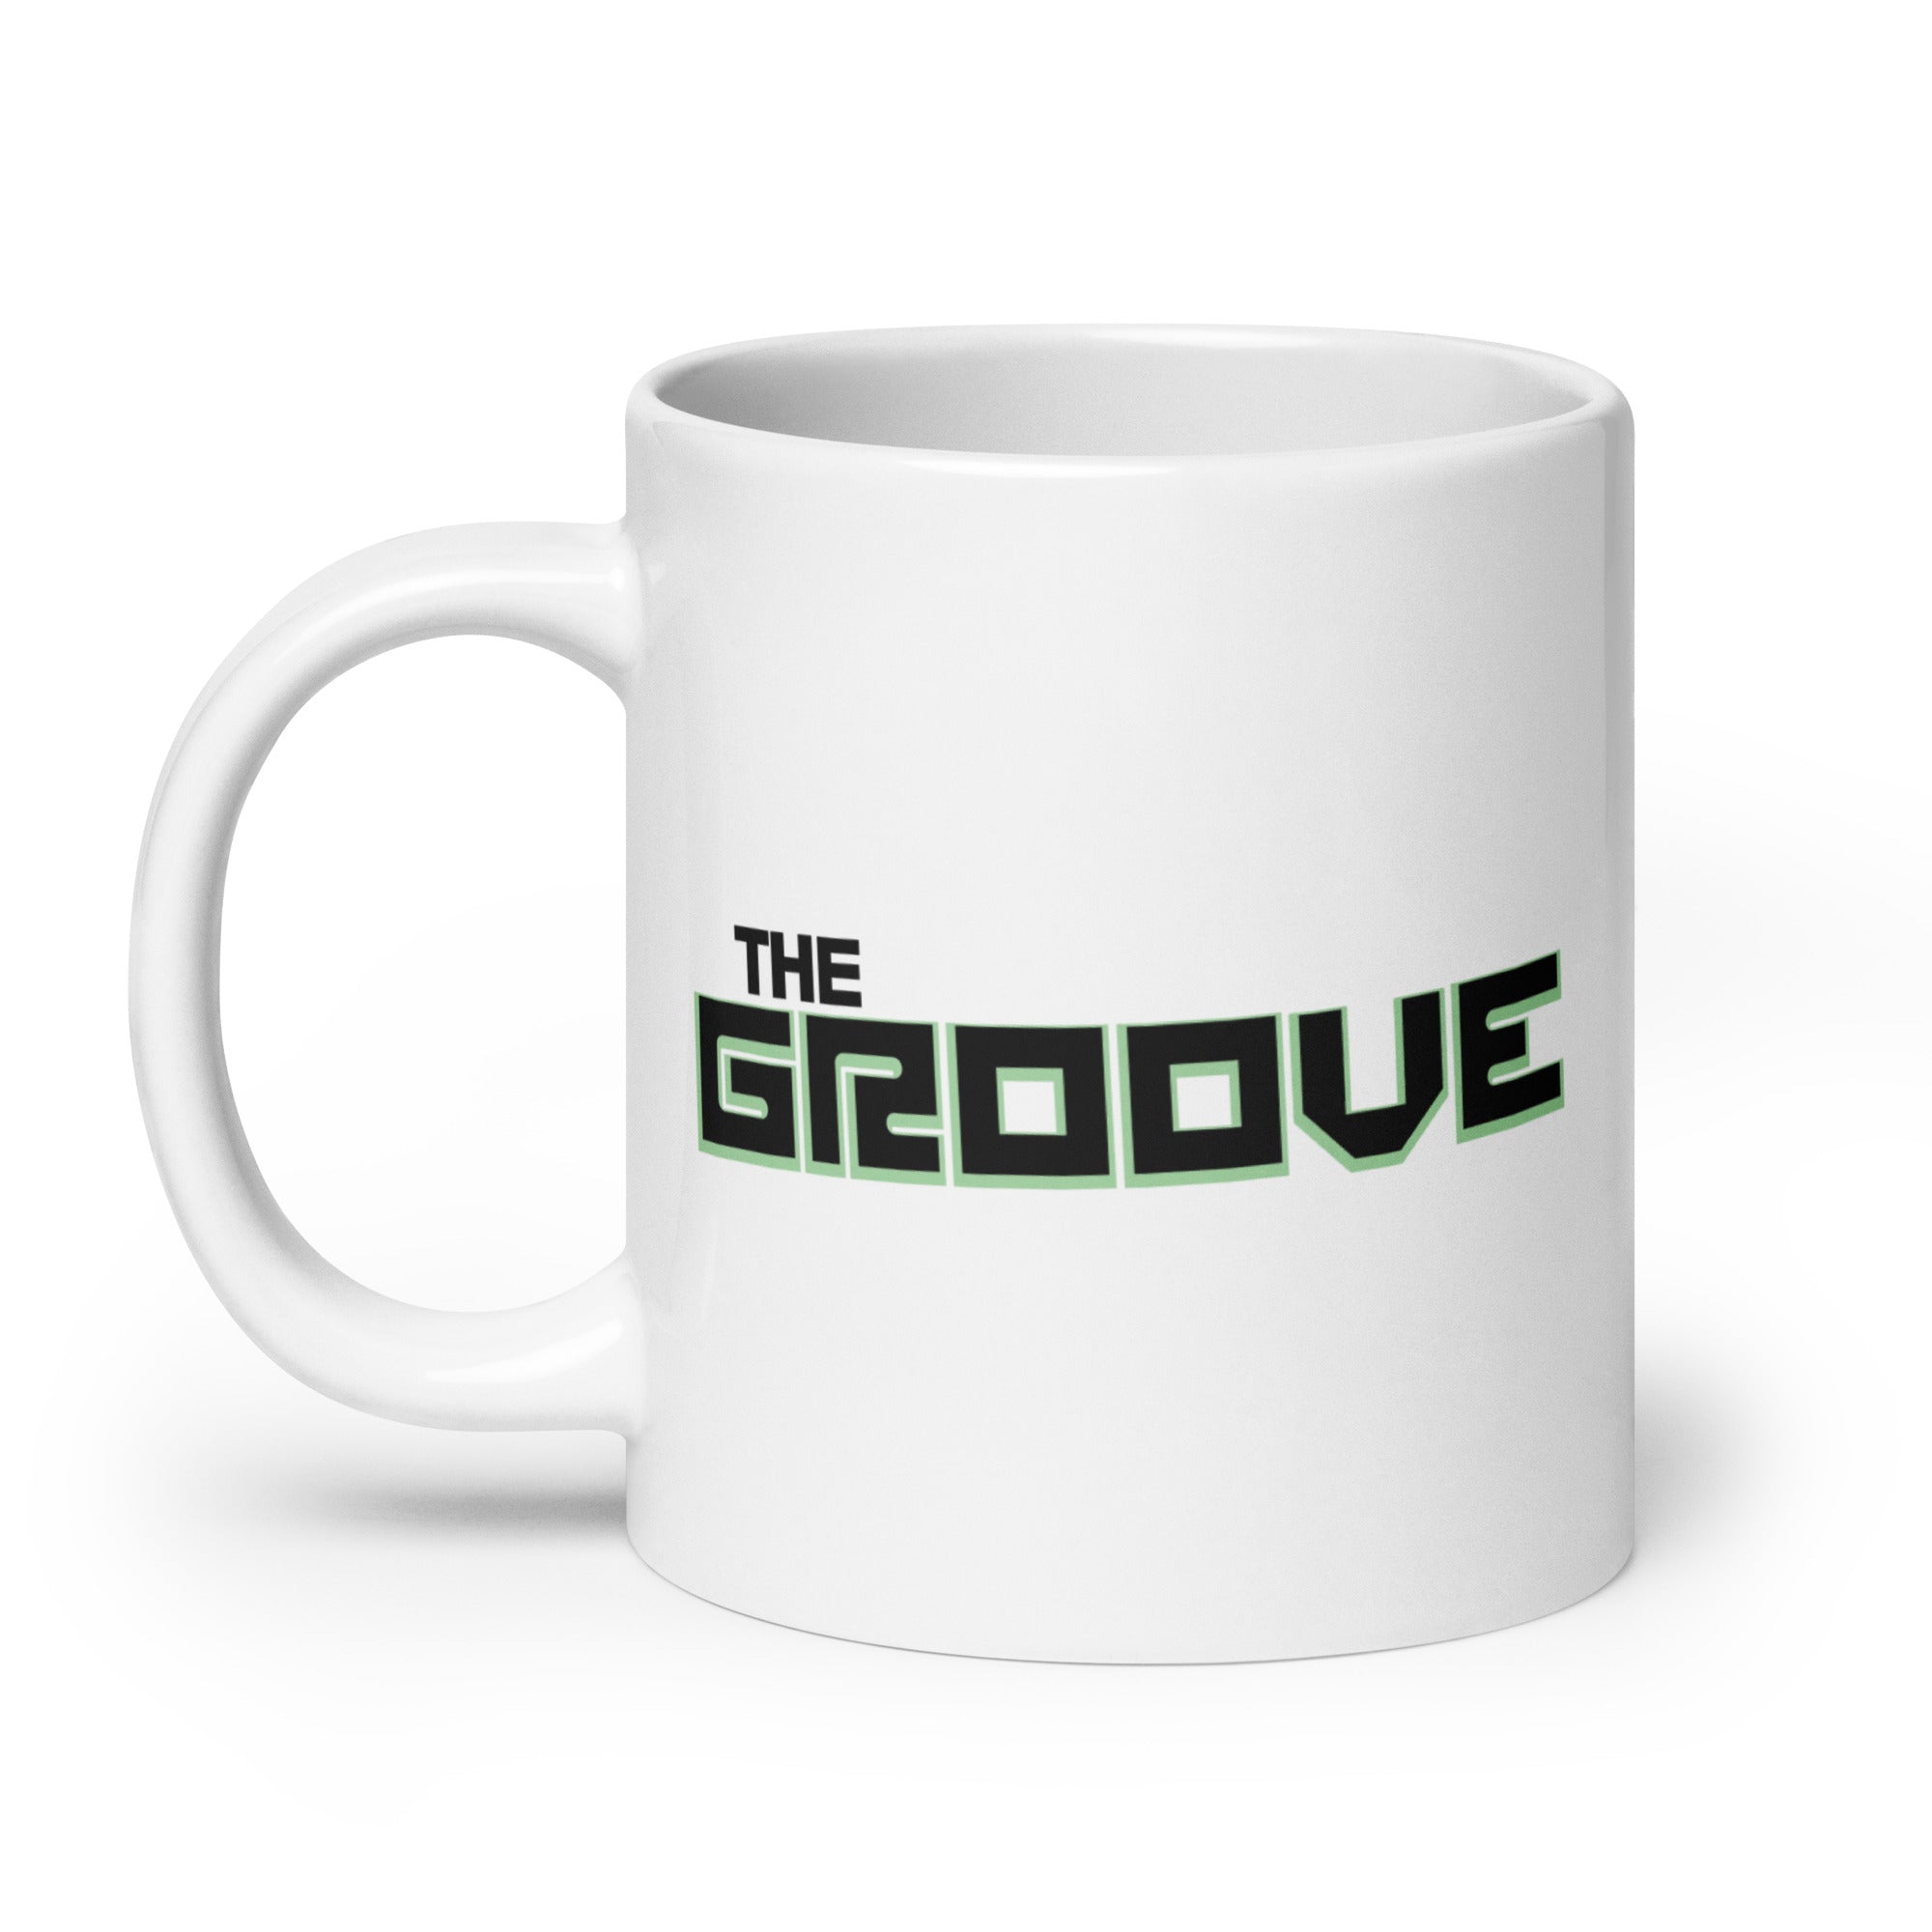 The Groove: Mug